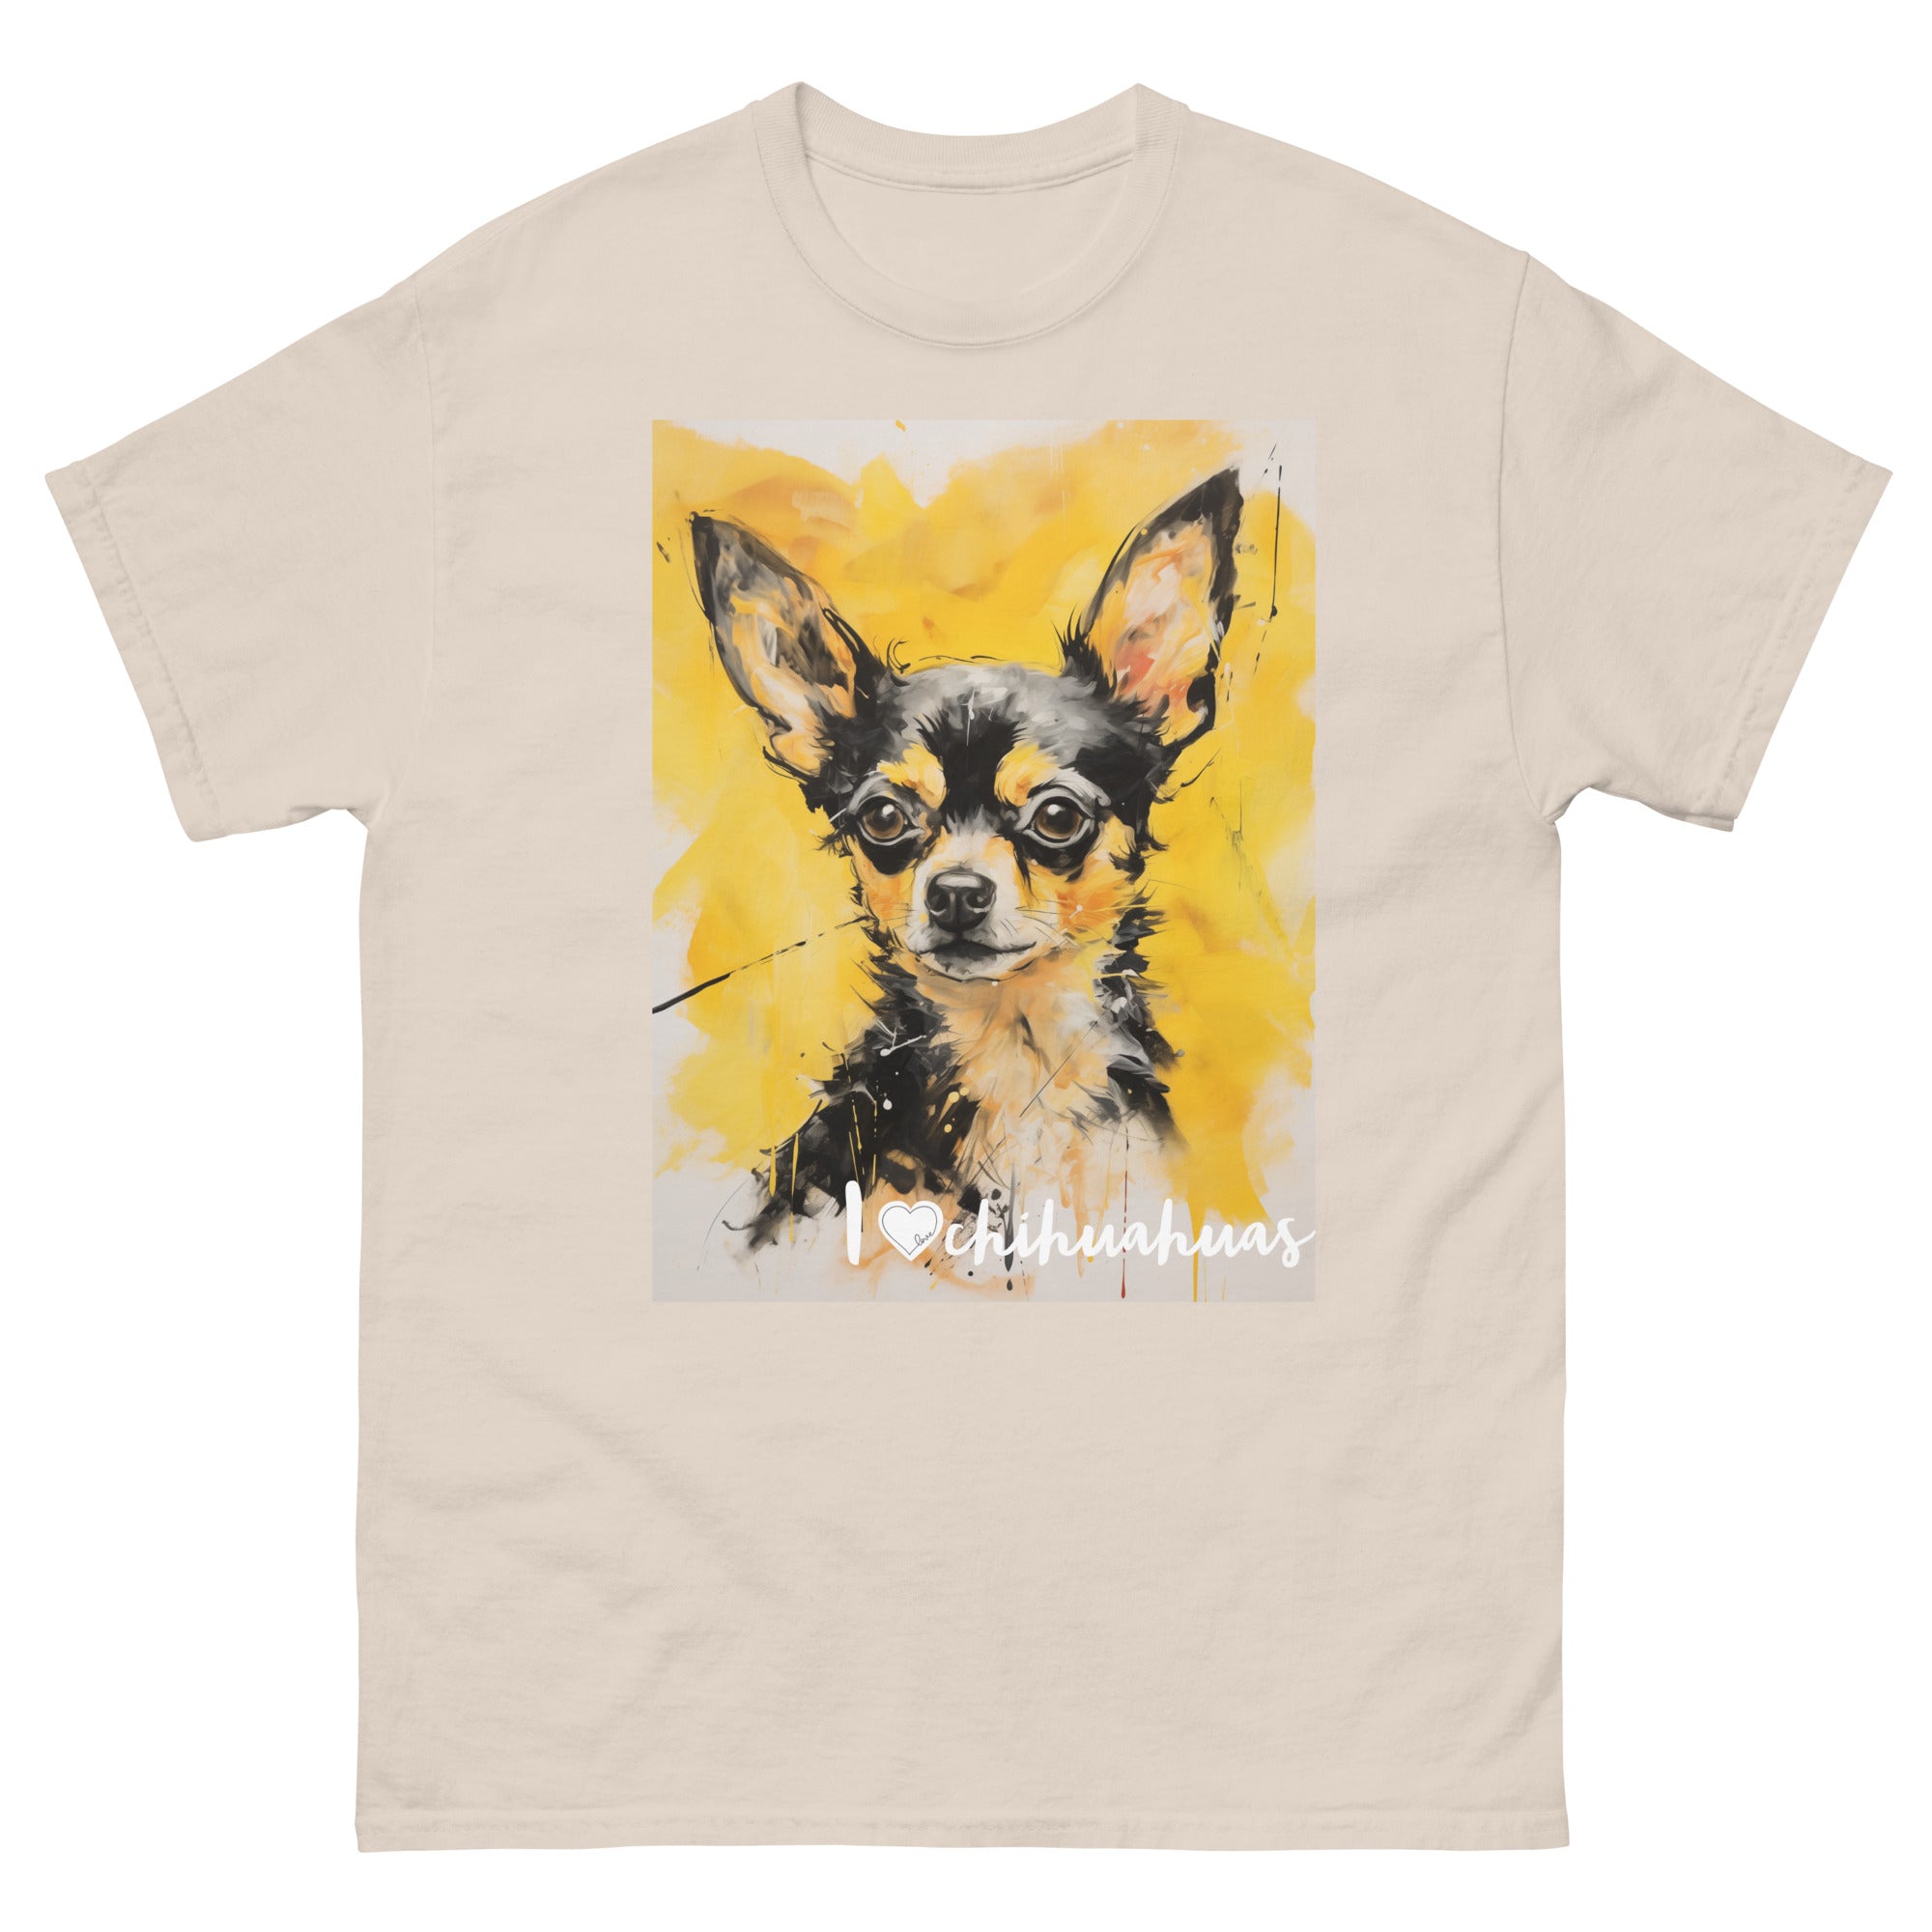 Men's classic tee - I ❤ DOGS - Chihuahua